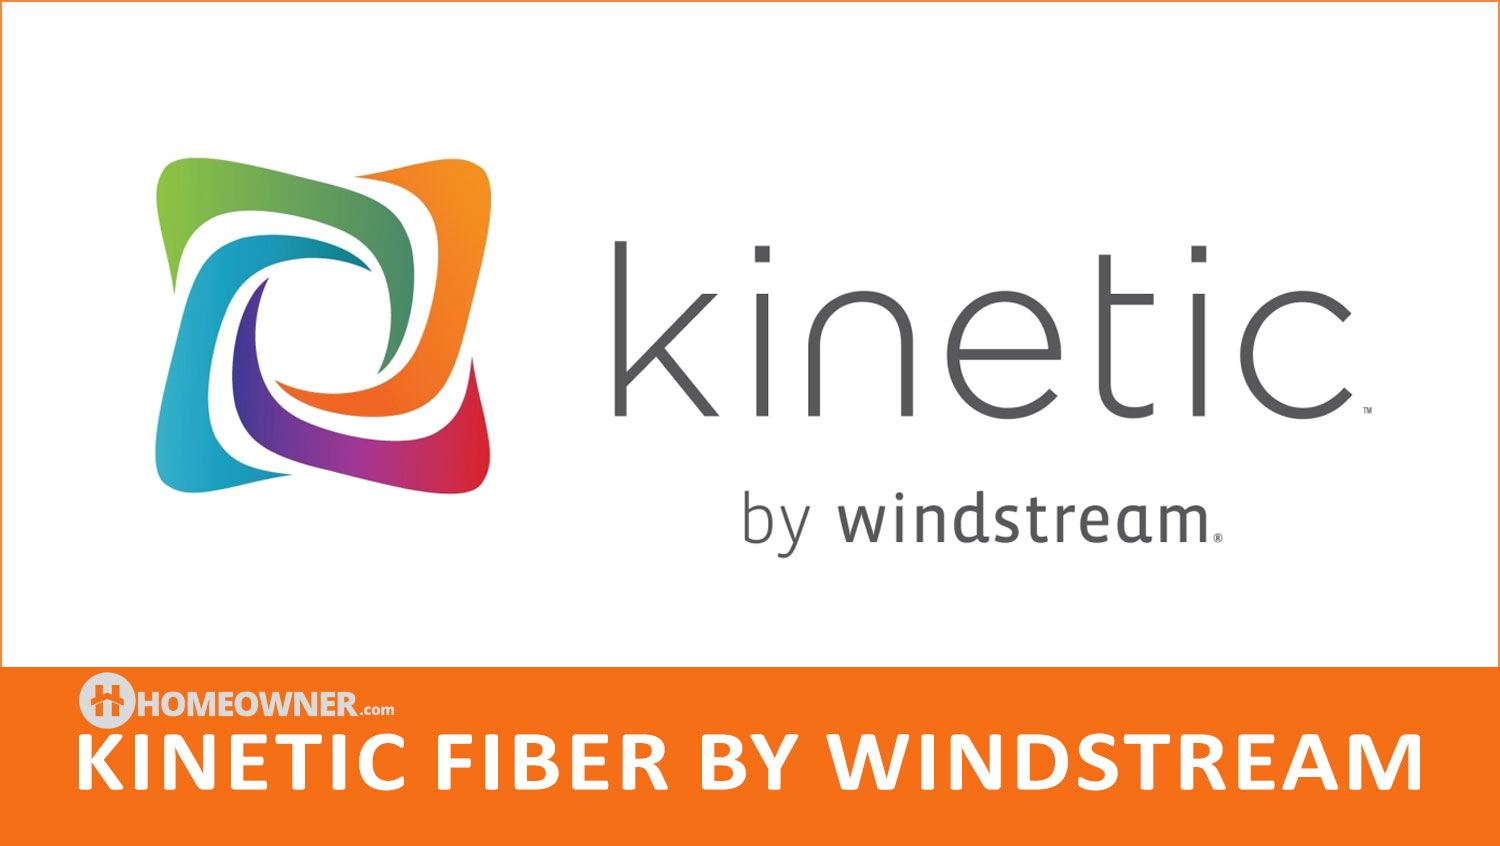 Kinetic Internet Service